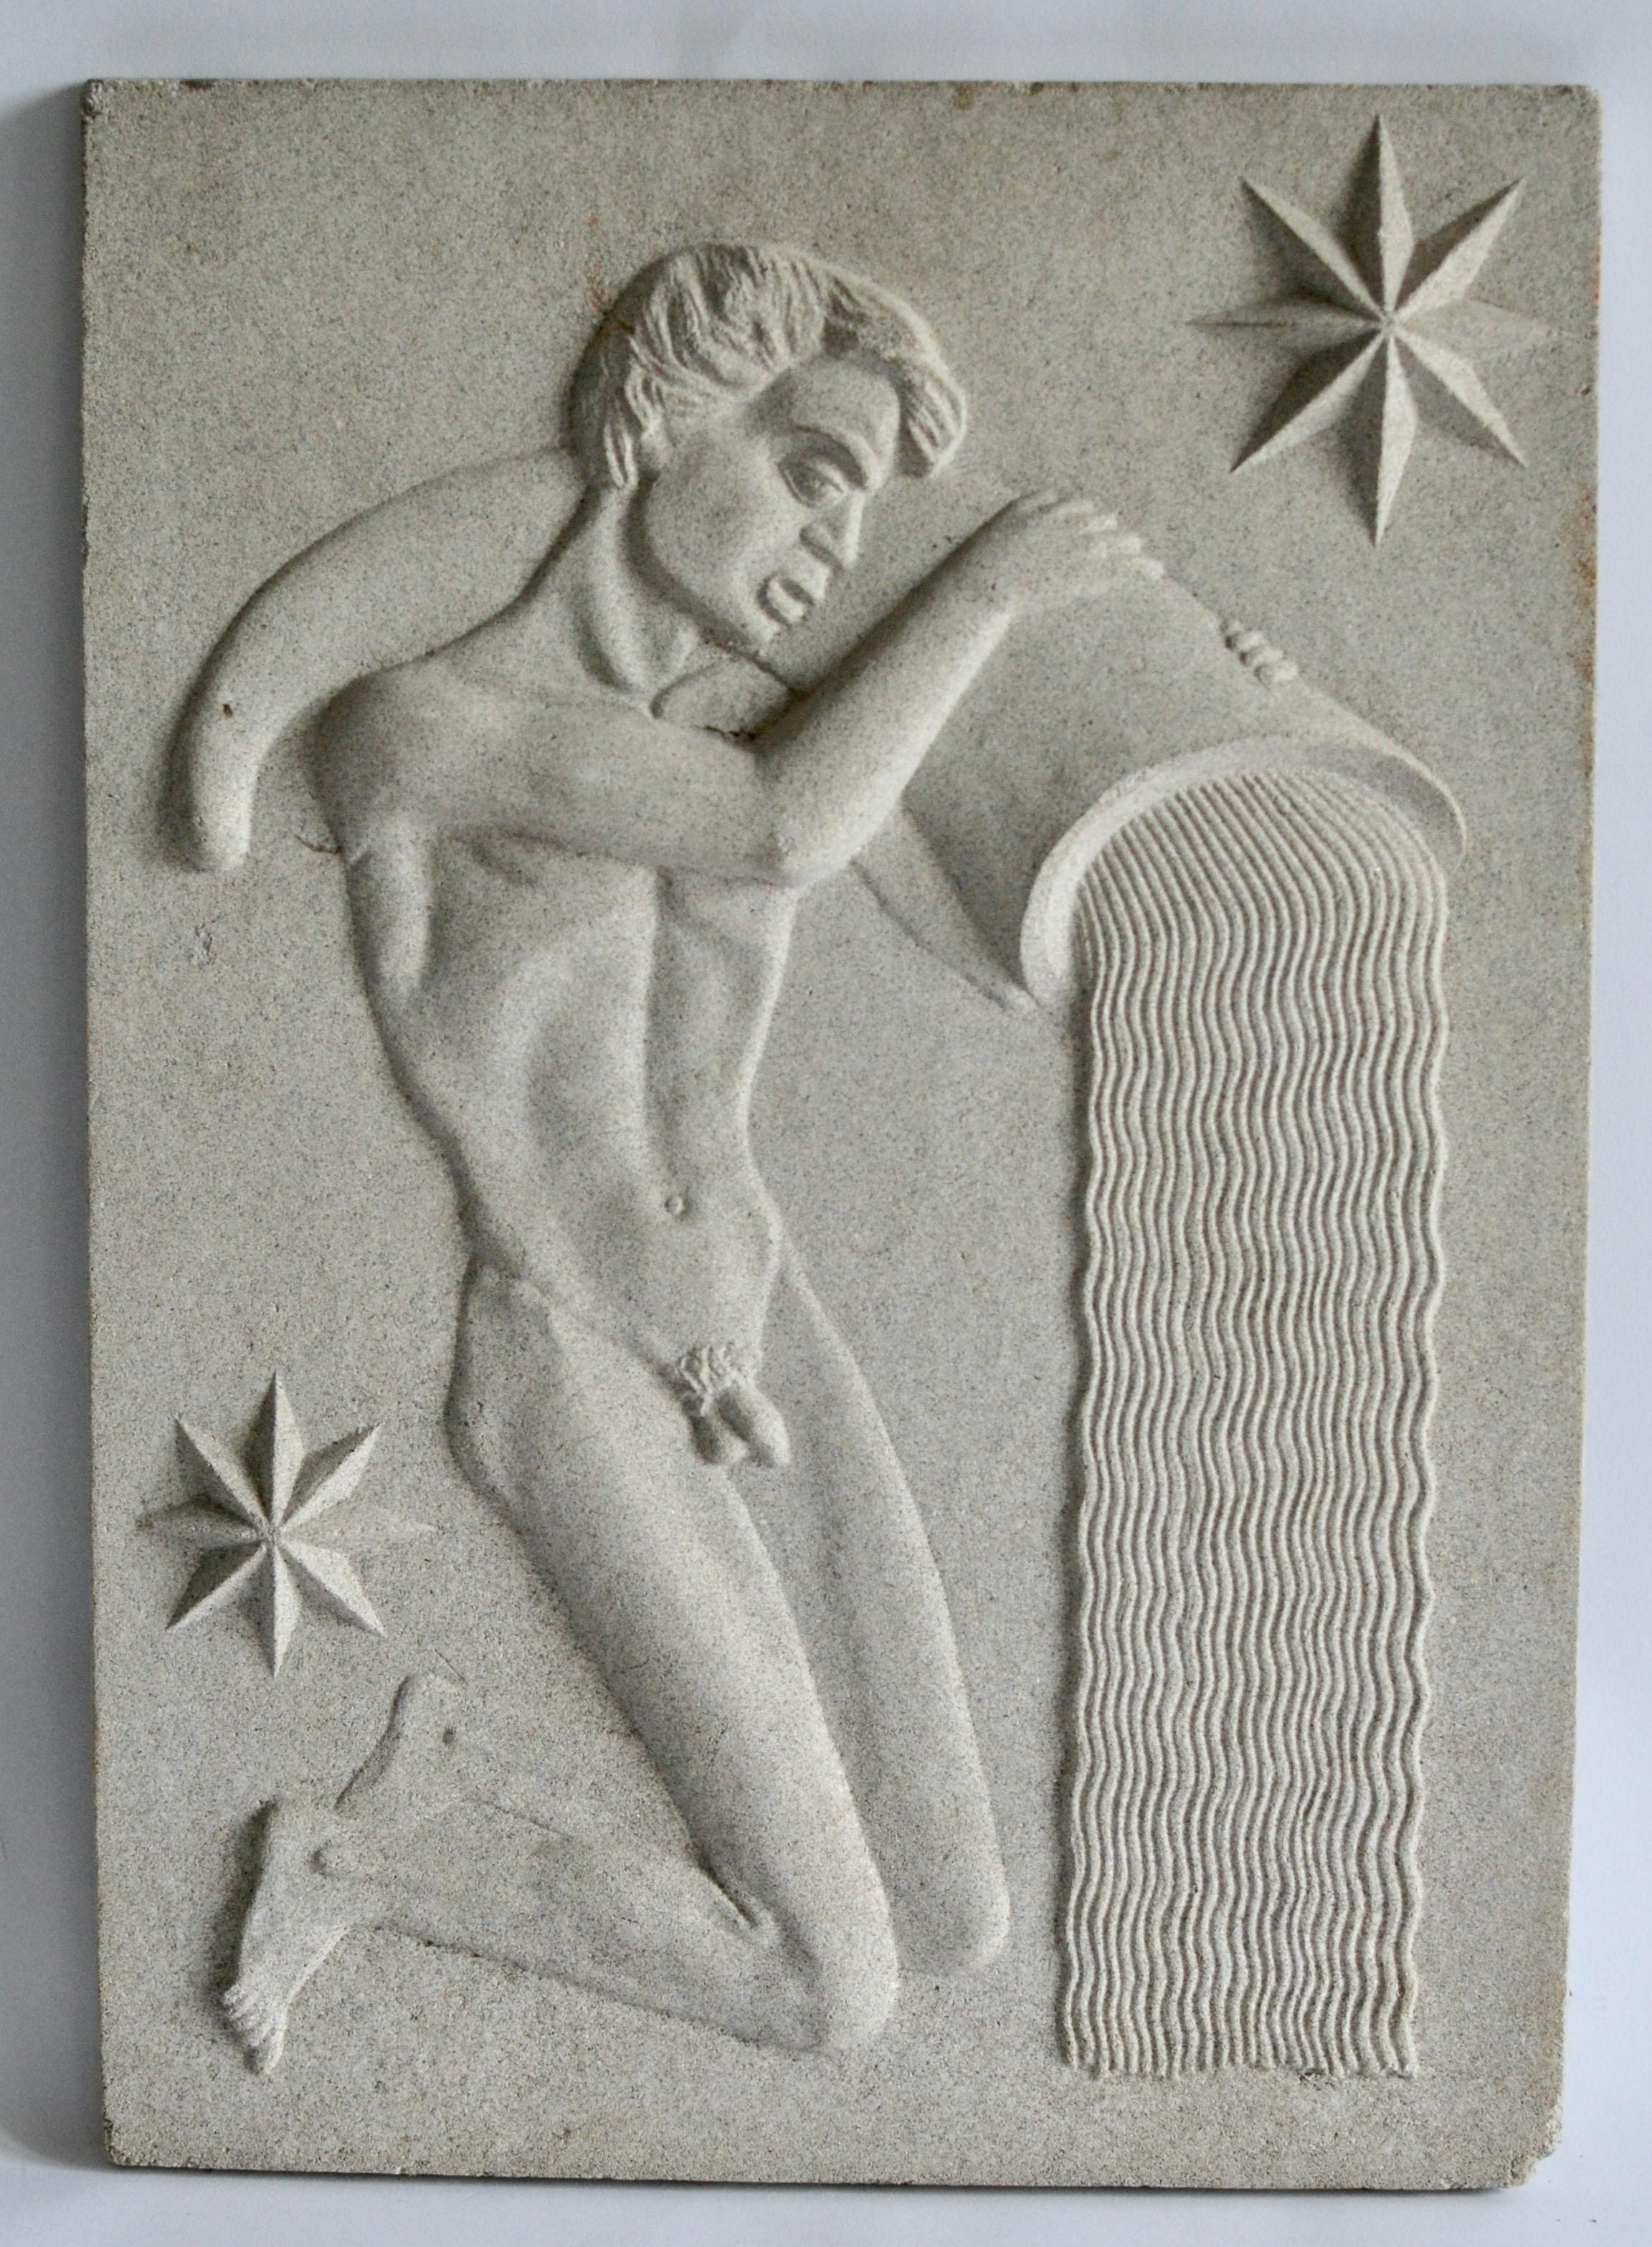 Cast Zodiac Artificial Stone Relief Sign of Virgo, c. 1940